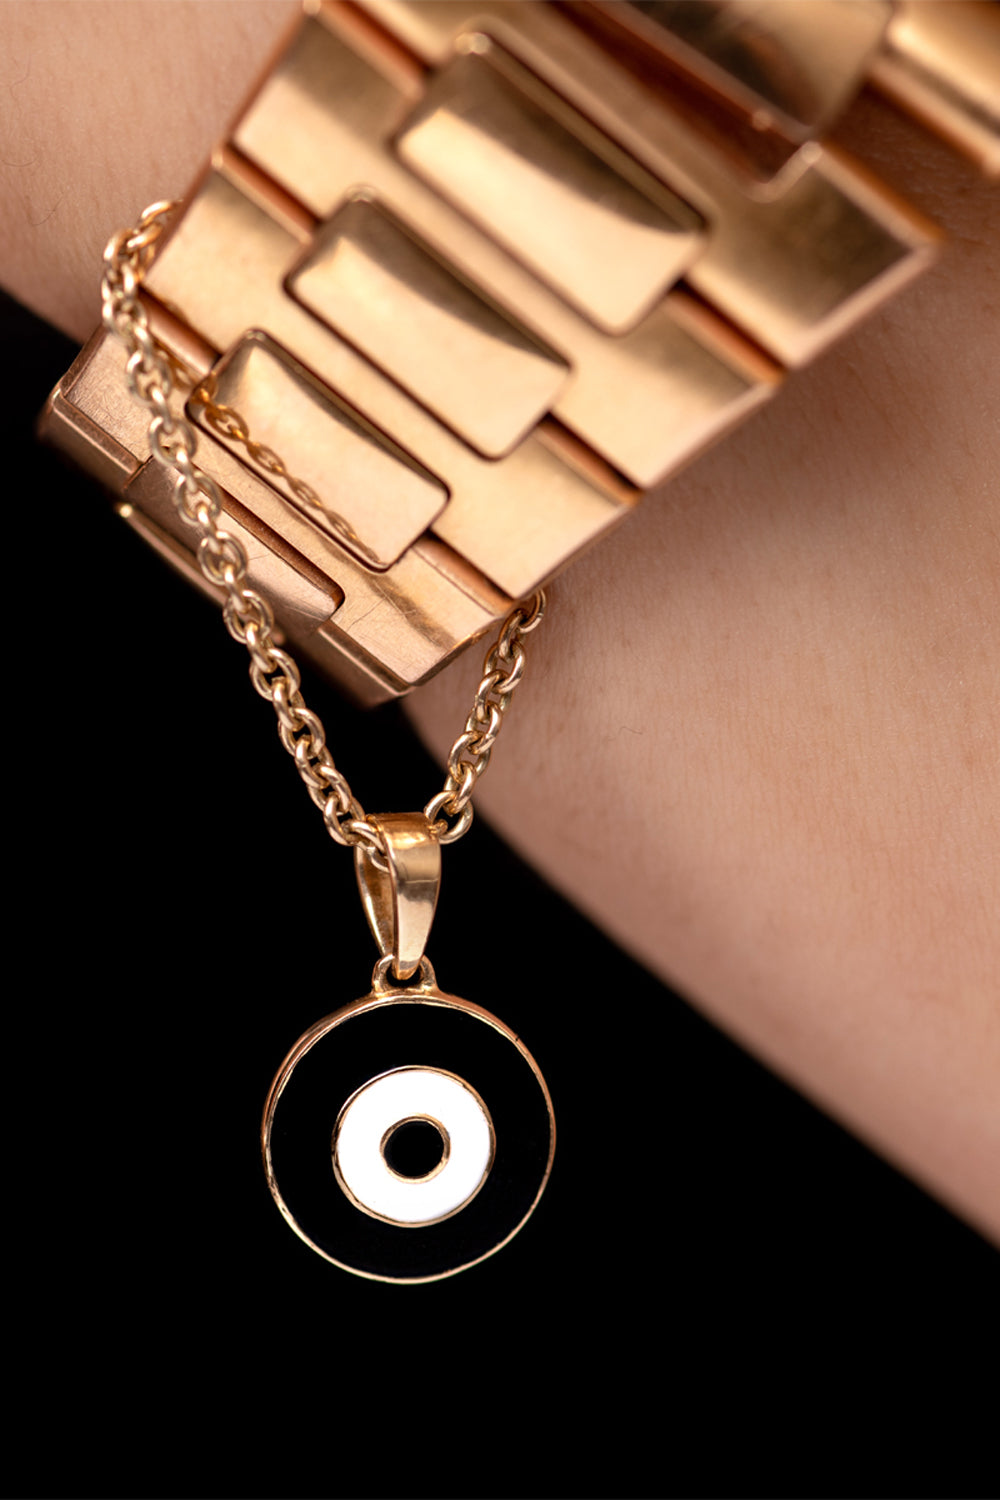 Black & White Enamel Chain Watch 14KT Gold Charm